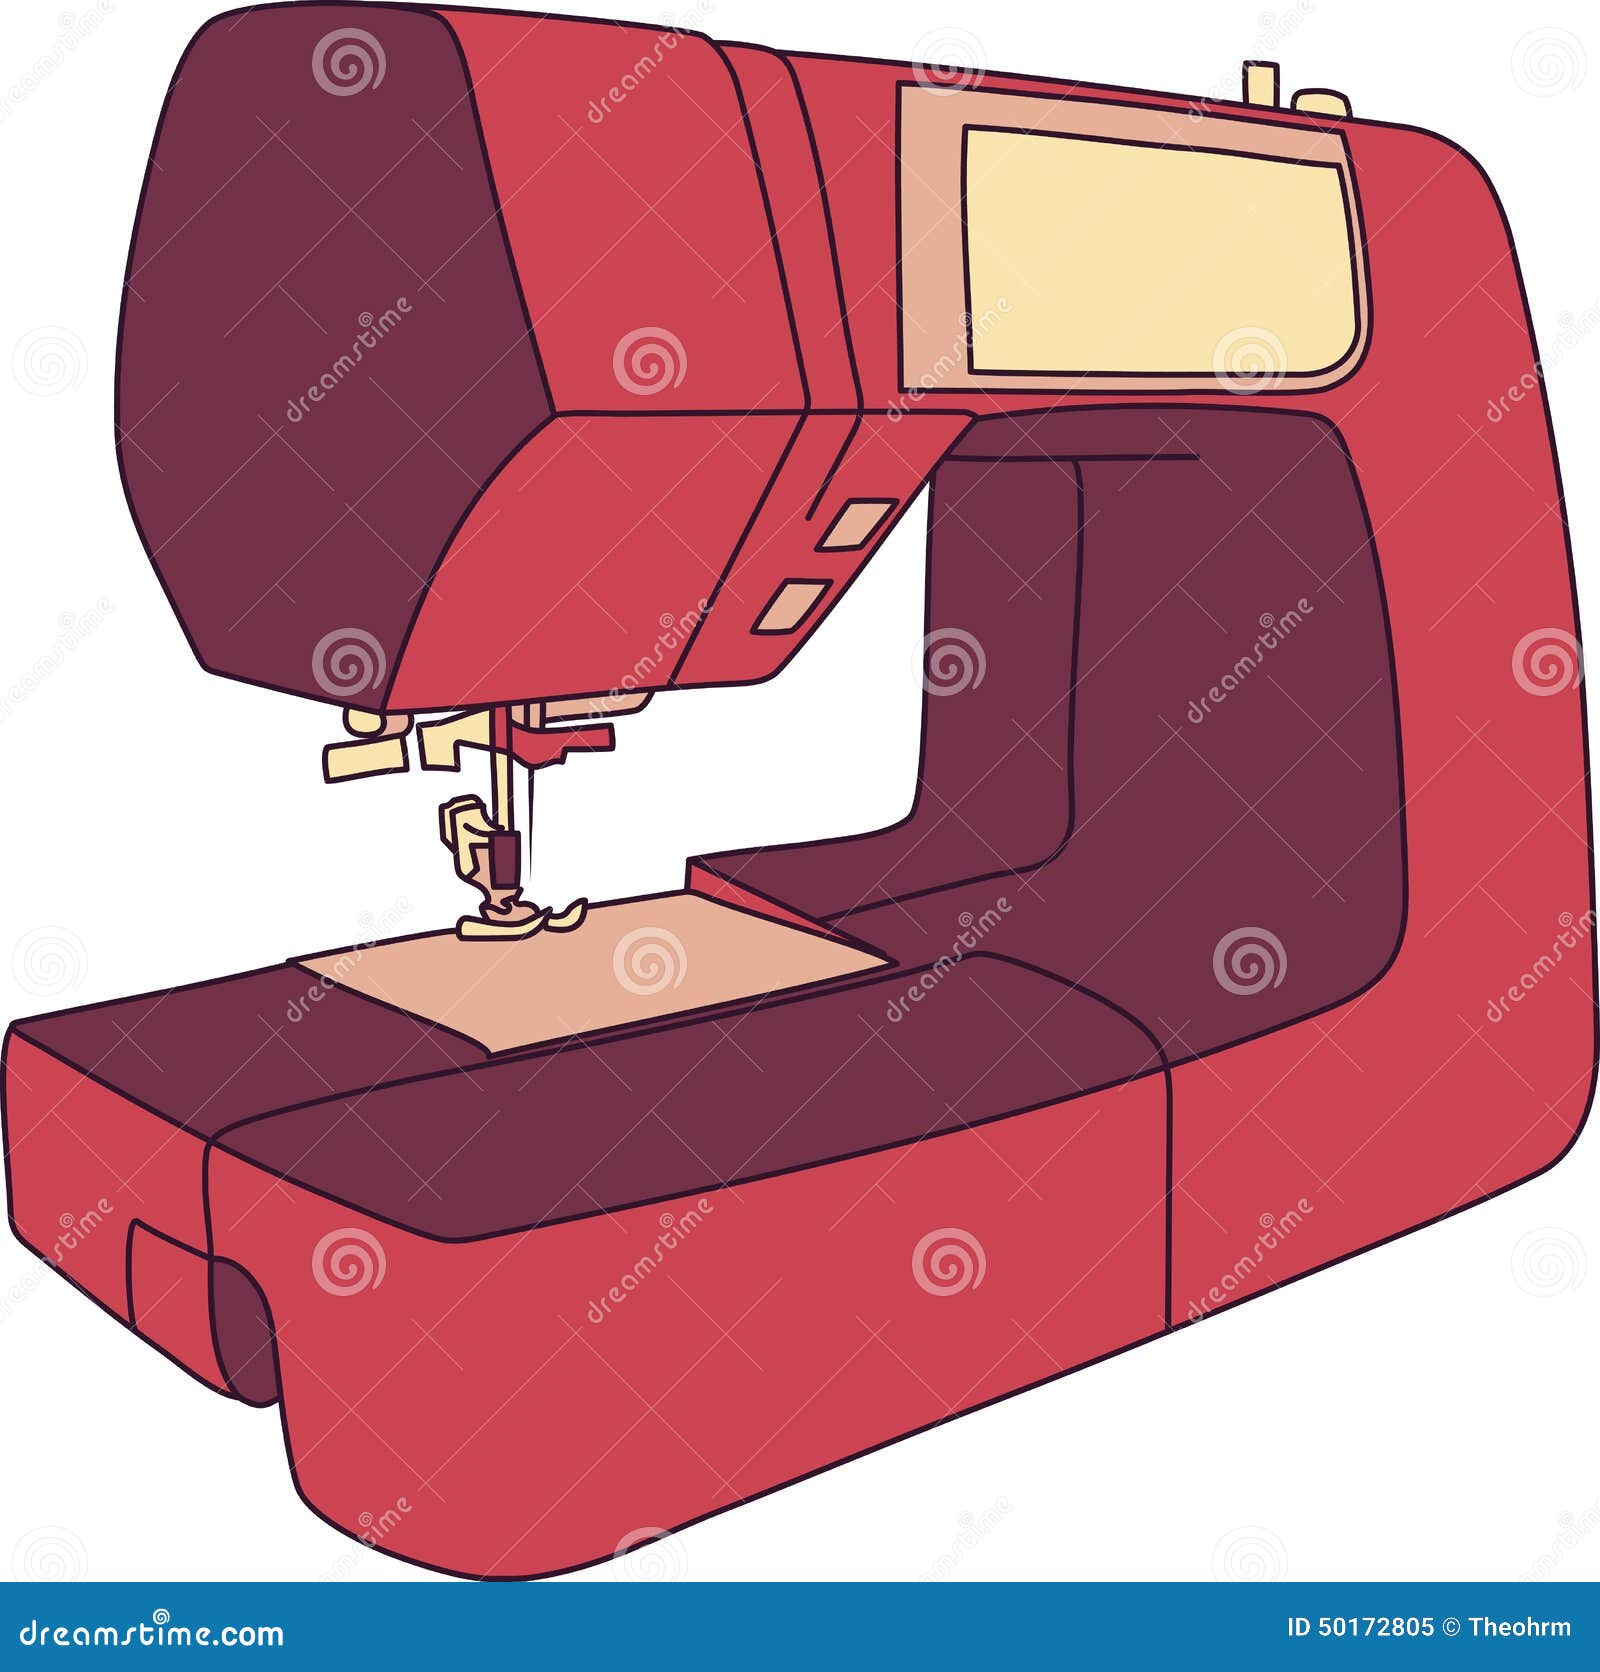 Cartoon Sewing Machine Stock Vector - Image: 50172805